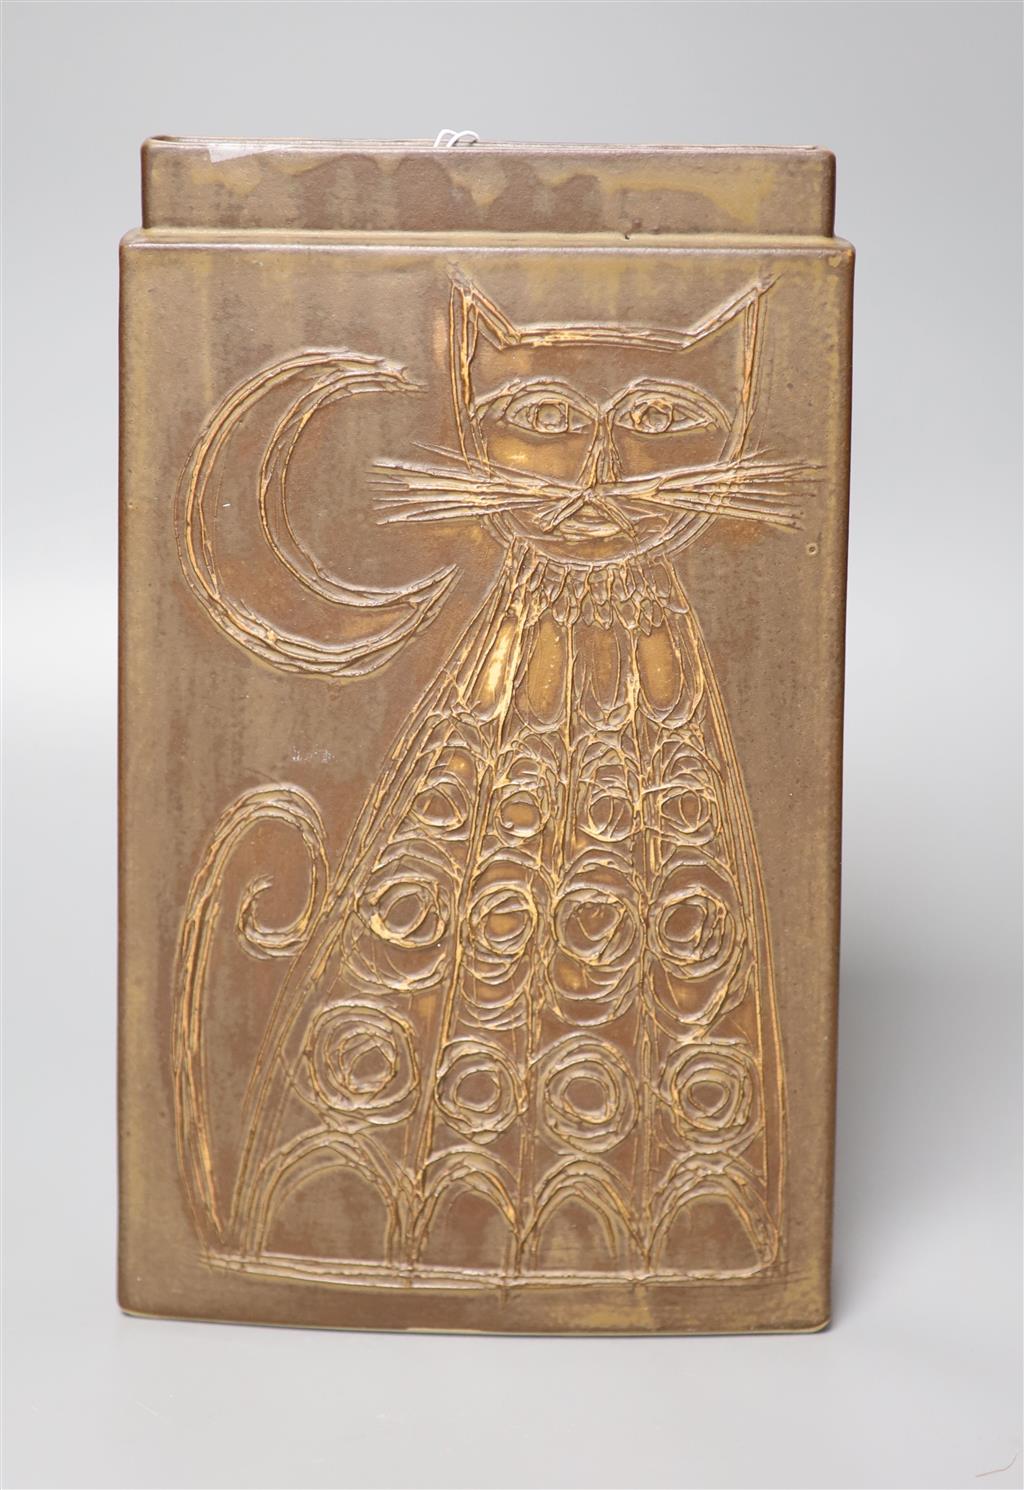 Owl and pussycat slab vase, circa 1970, possibly Padarn wares